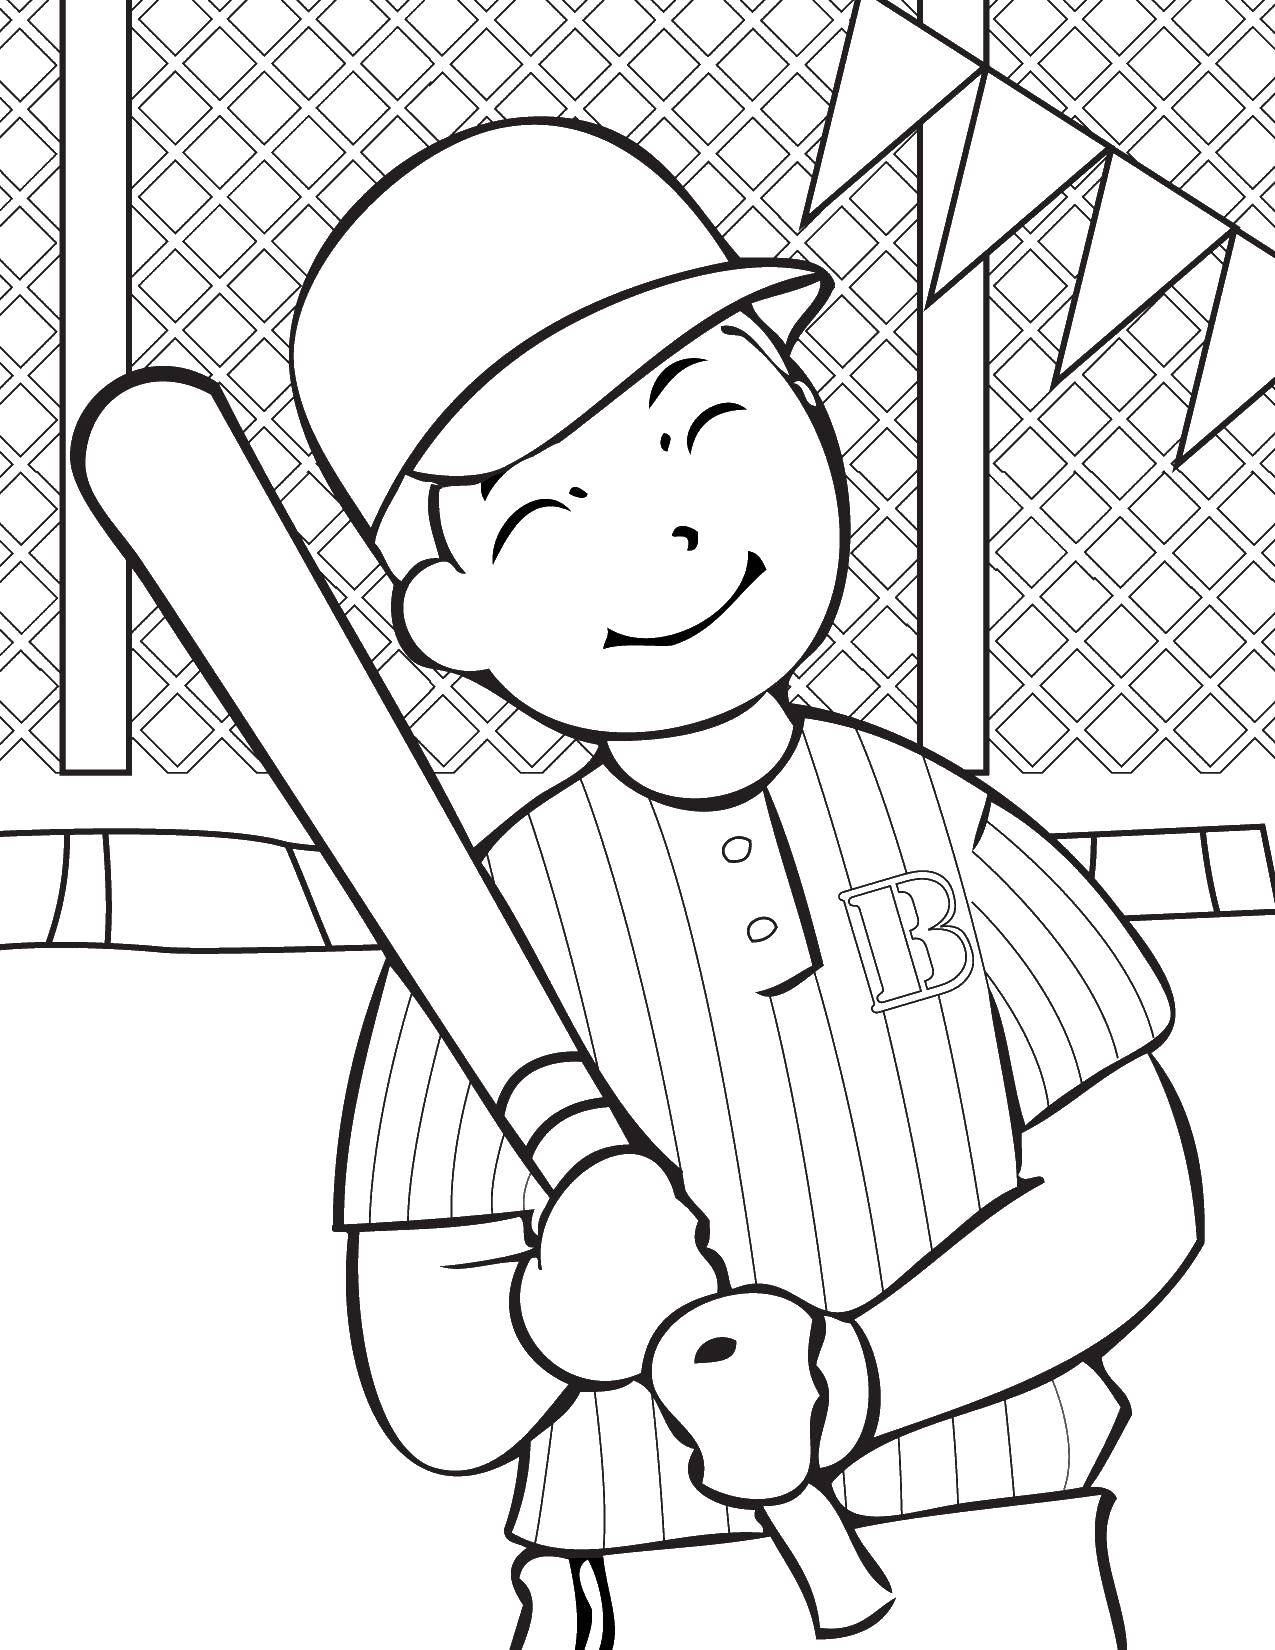 Coloring The boy is holding a baseball bat. Category Sports. Tags:  boy , baseball bat.